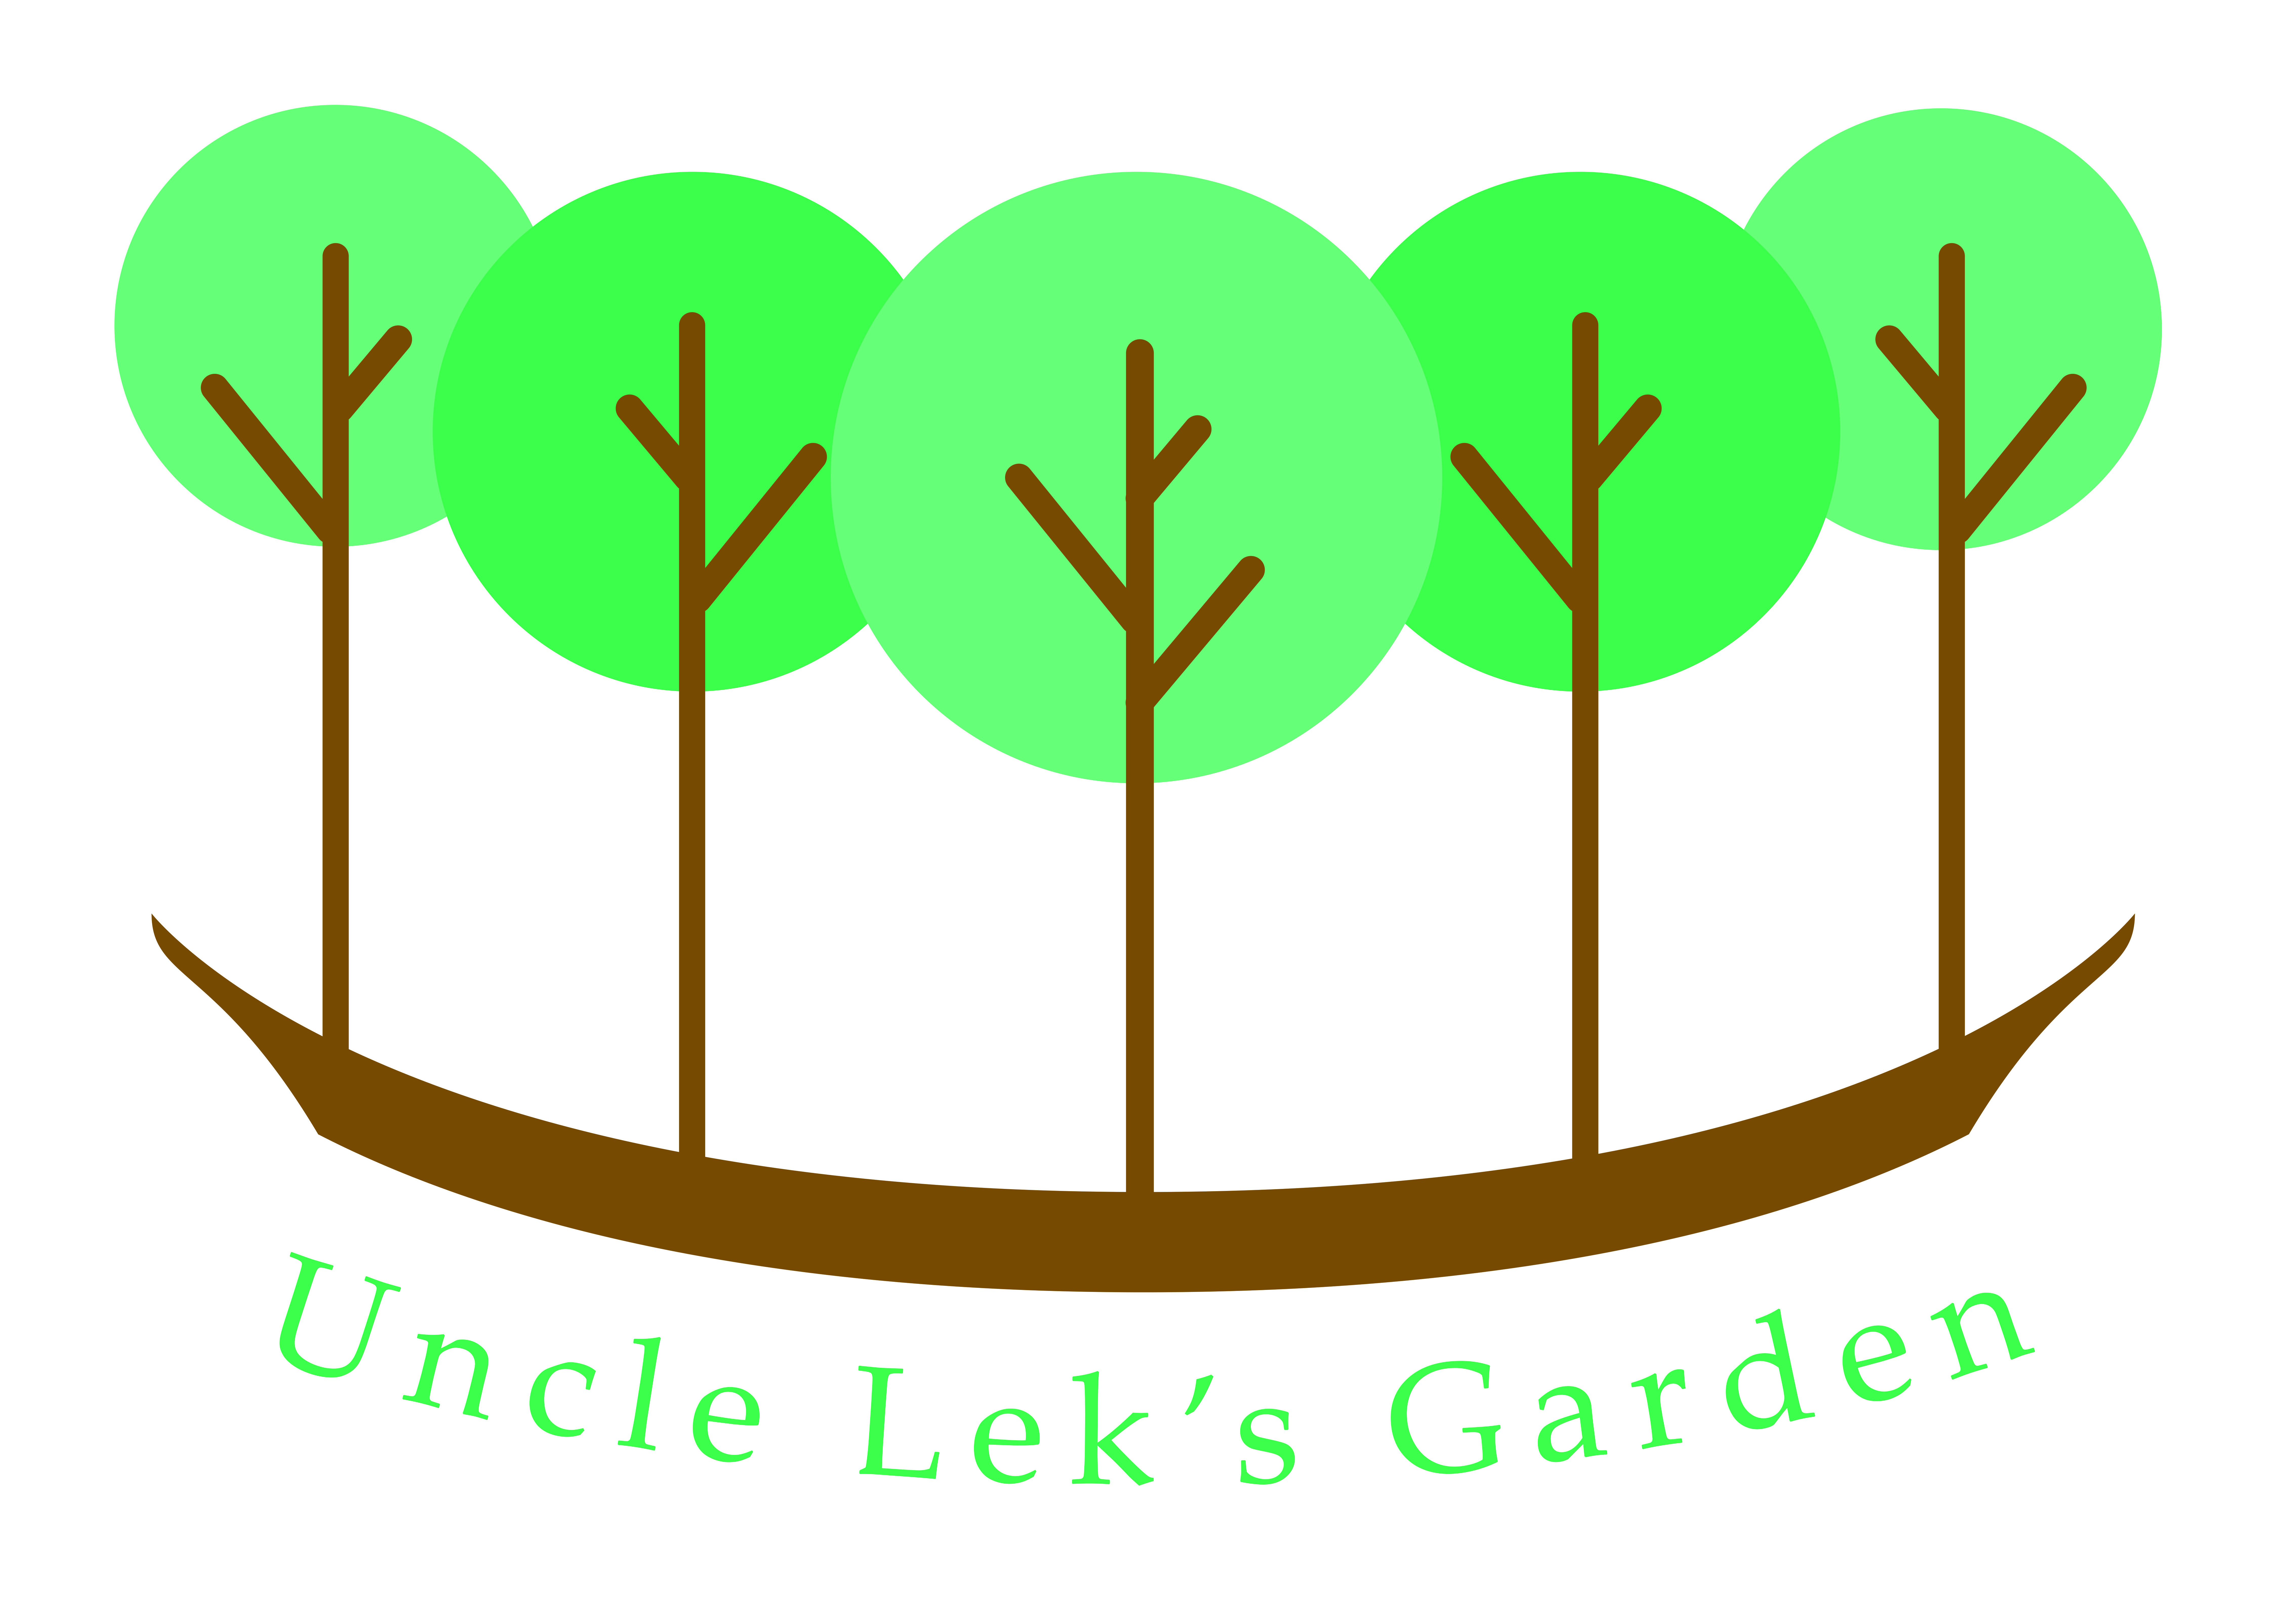 Uncle Lek's Garden